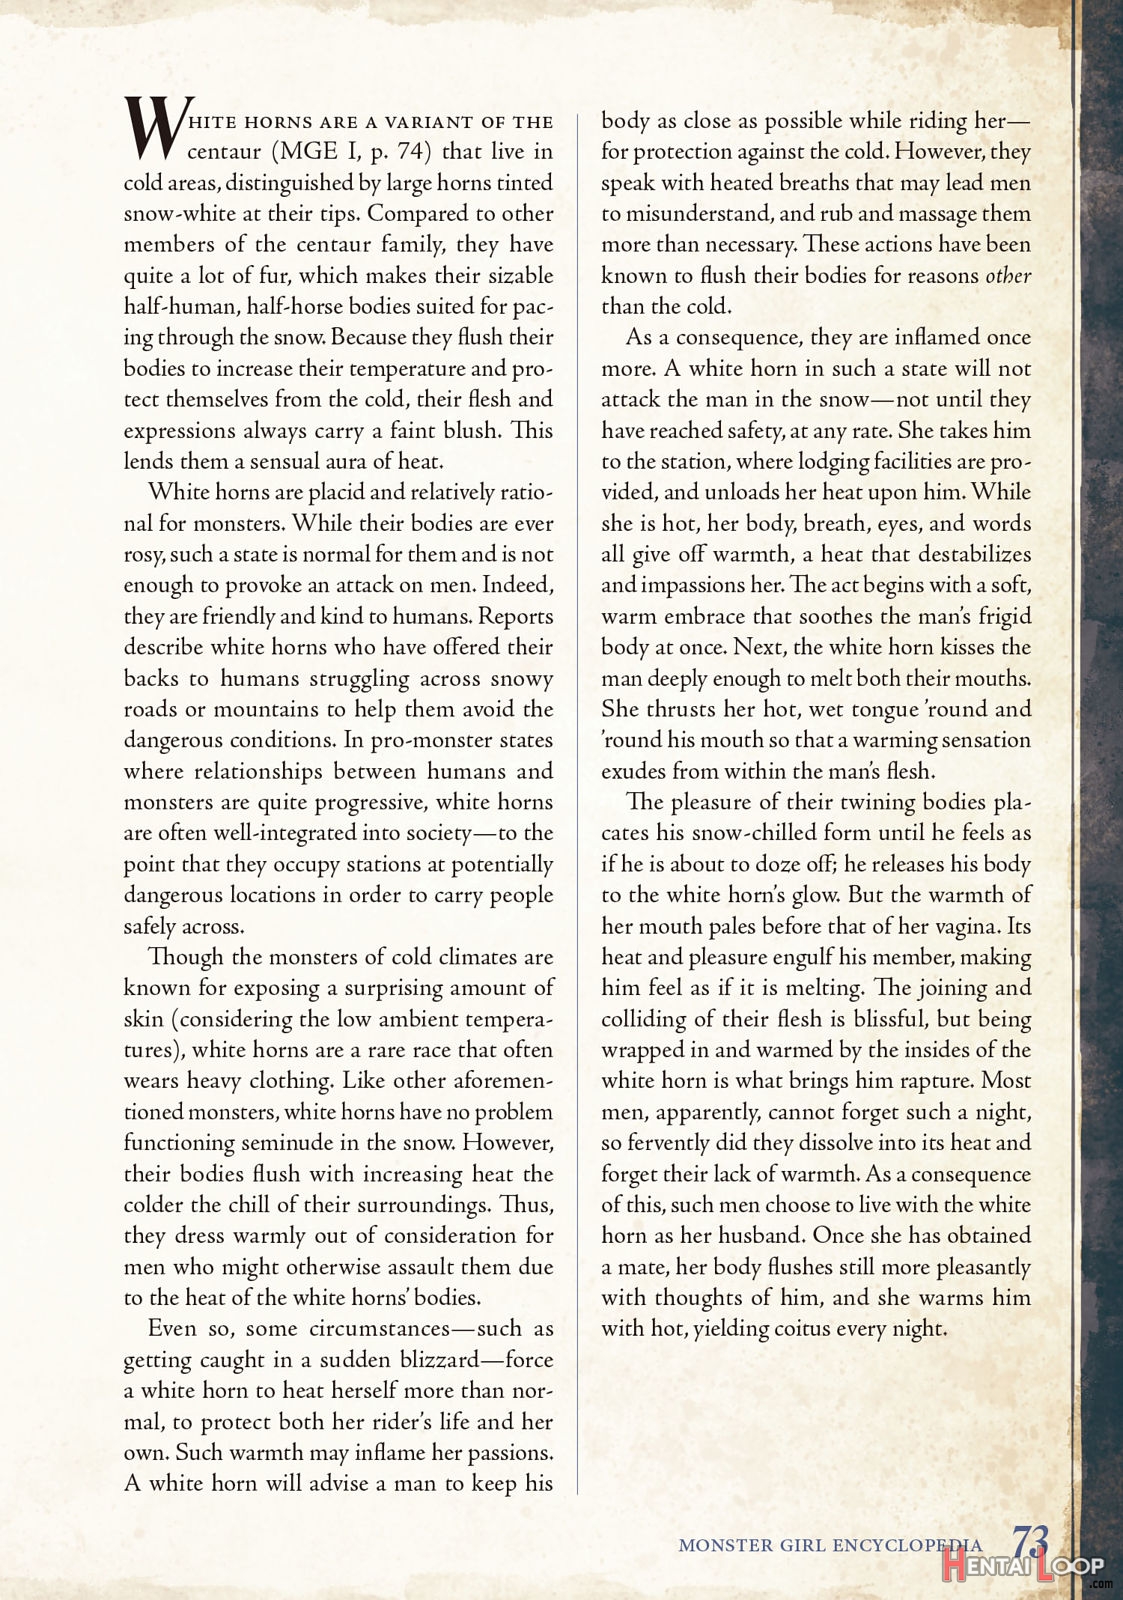 Monster Girl Encyclopedia Vol. 2 page 74